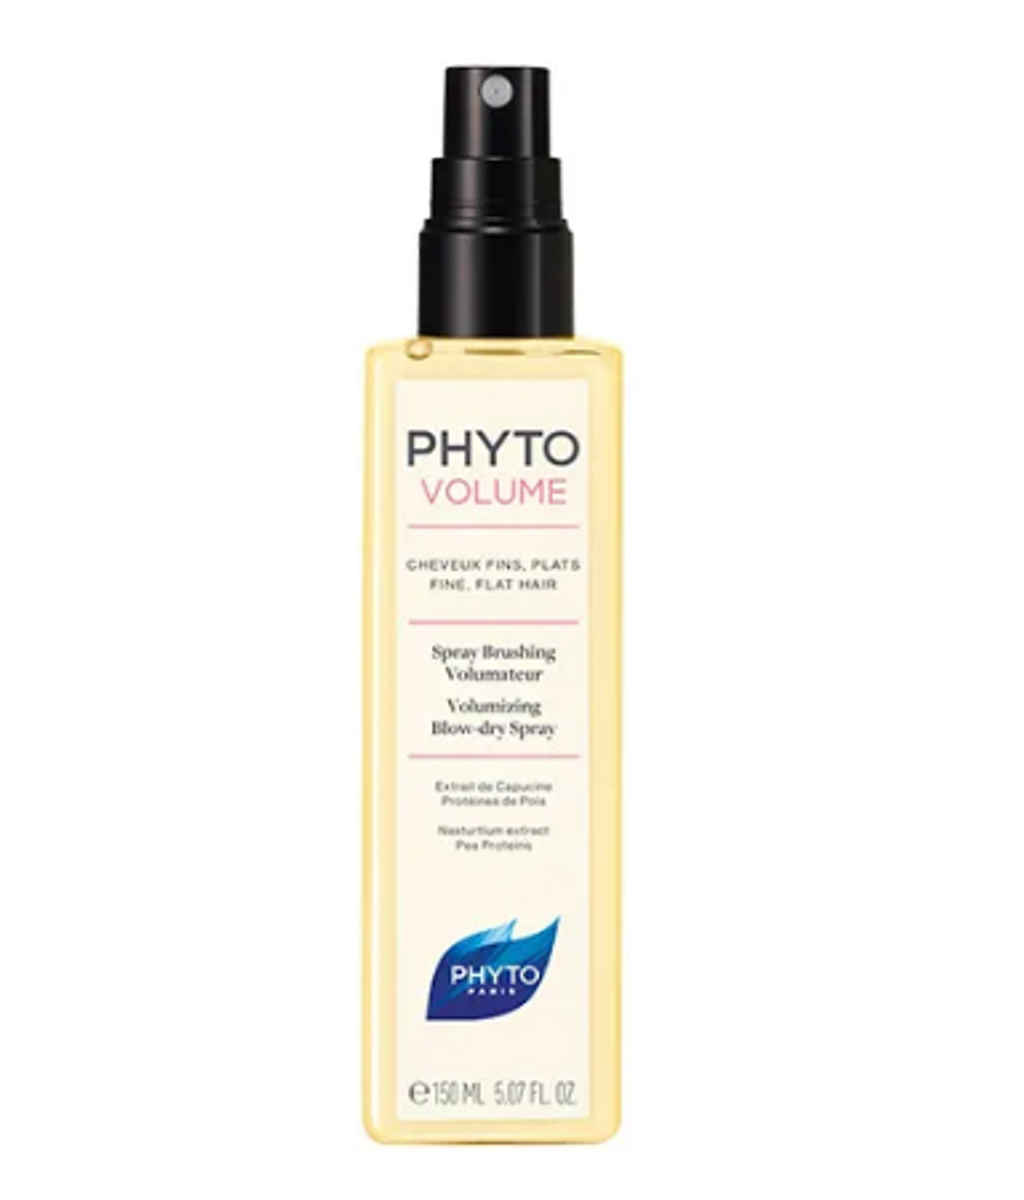 Phyto Volume Spray de Phyto